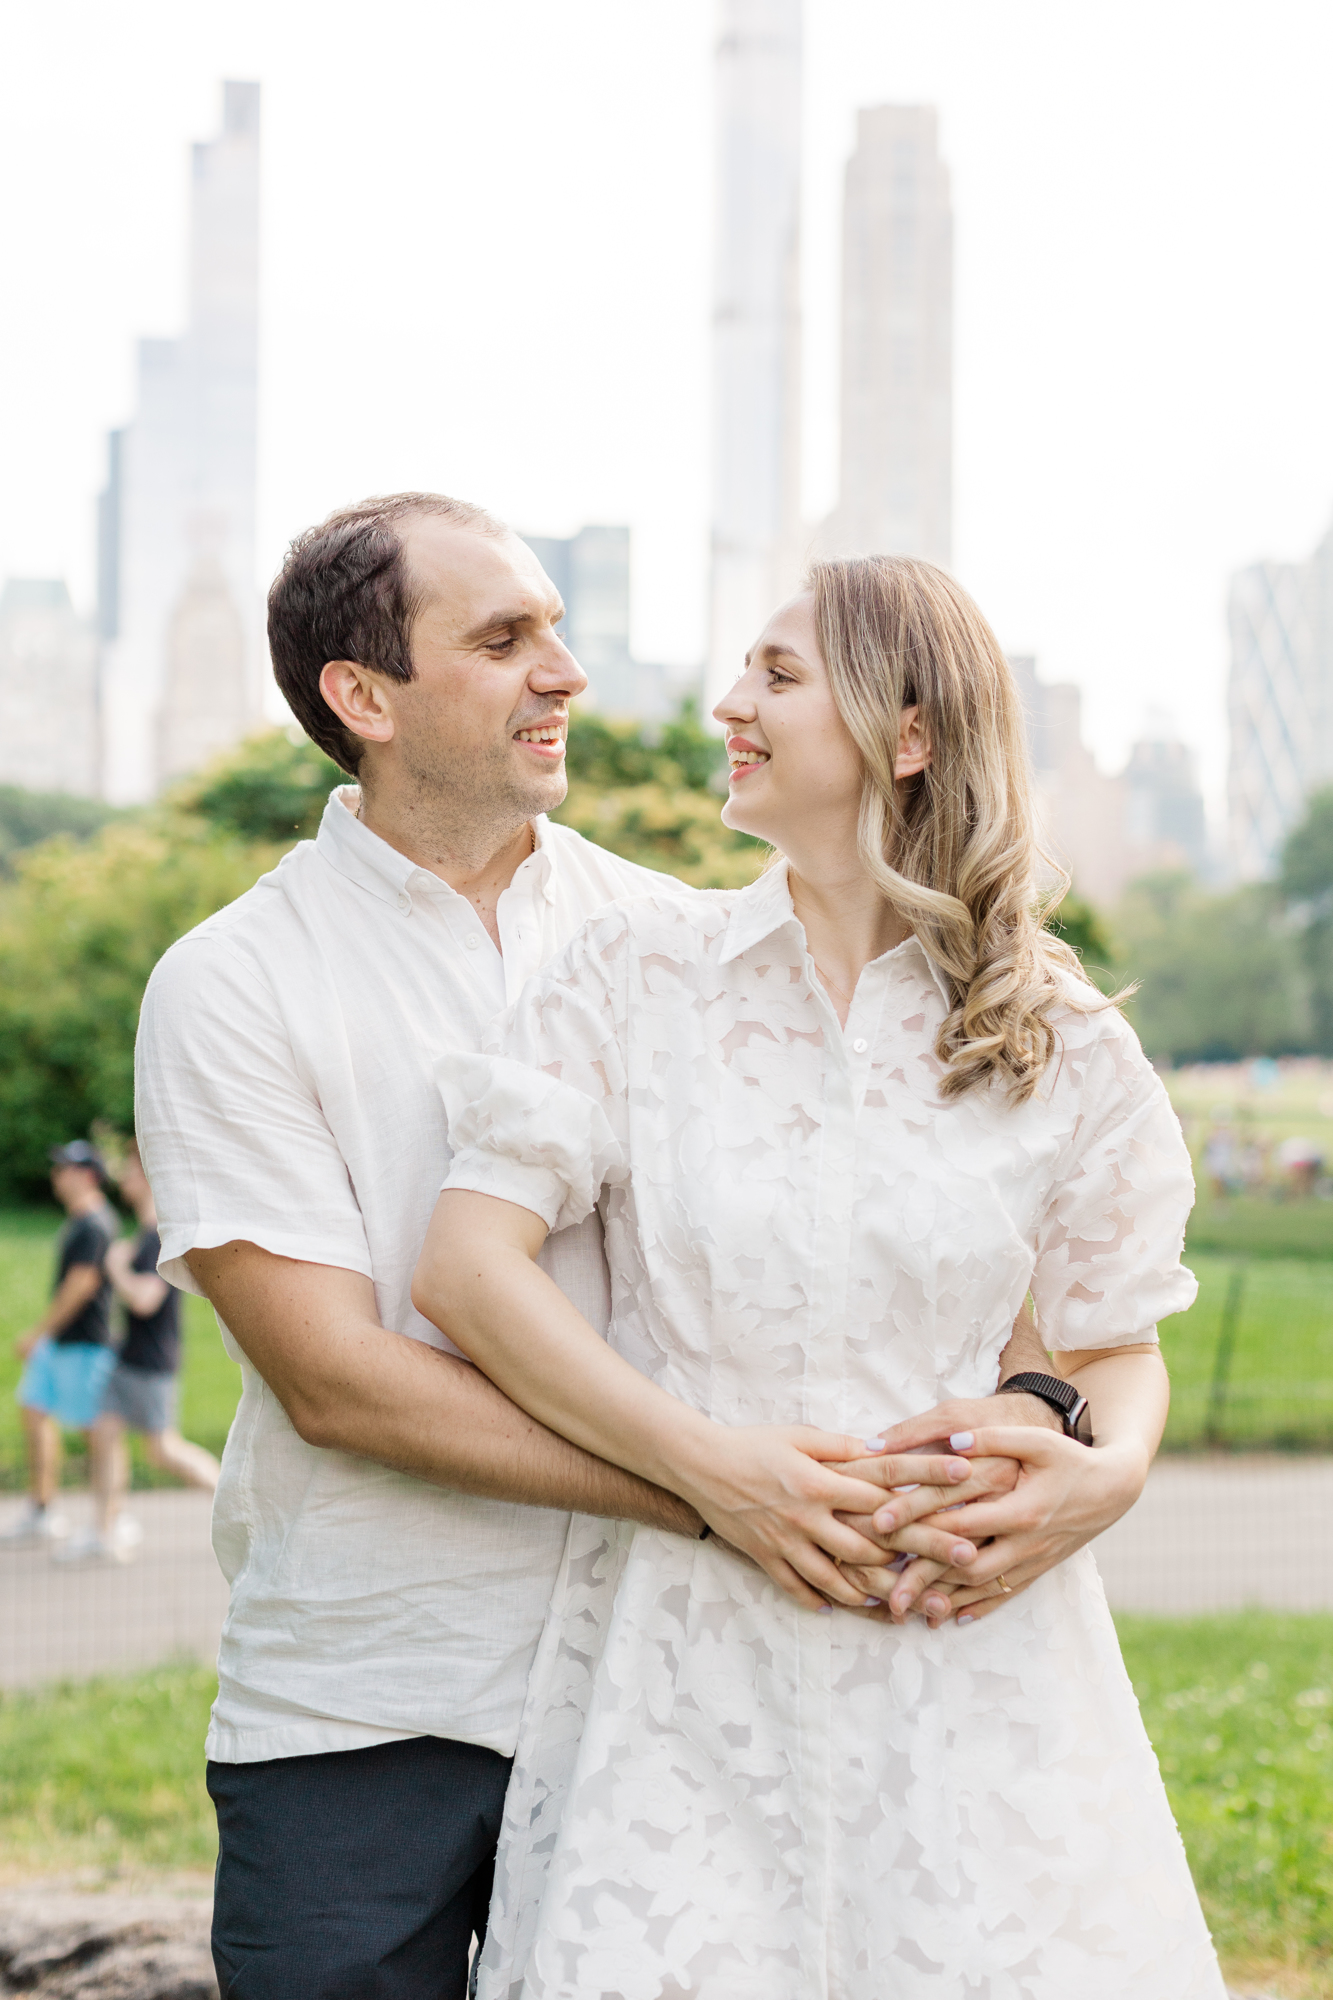 Vibrant Family Photos in Central Park